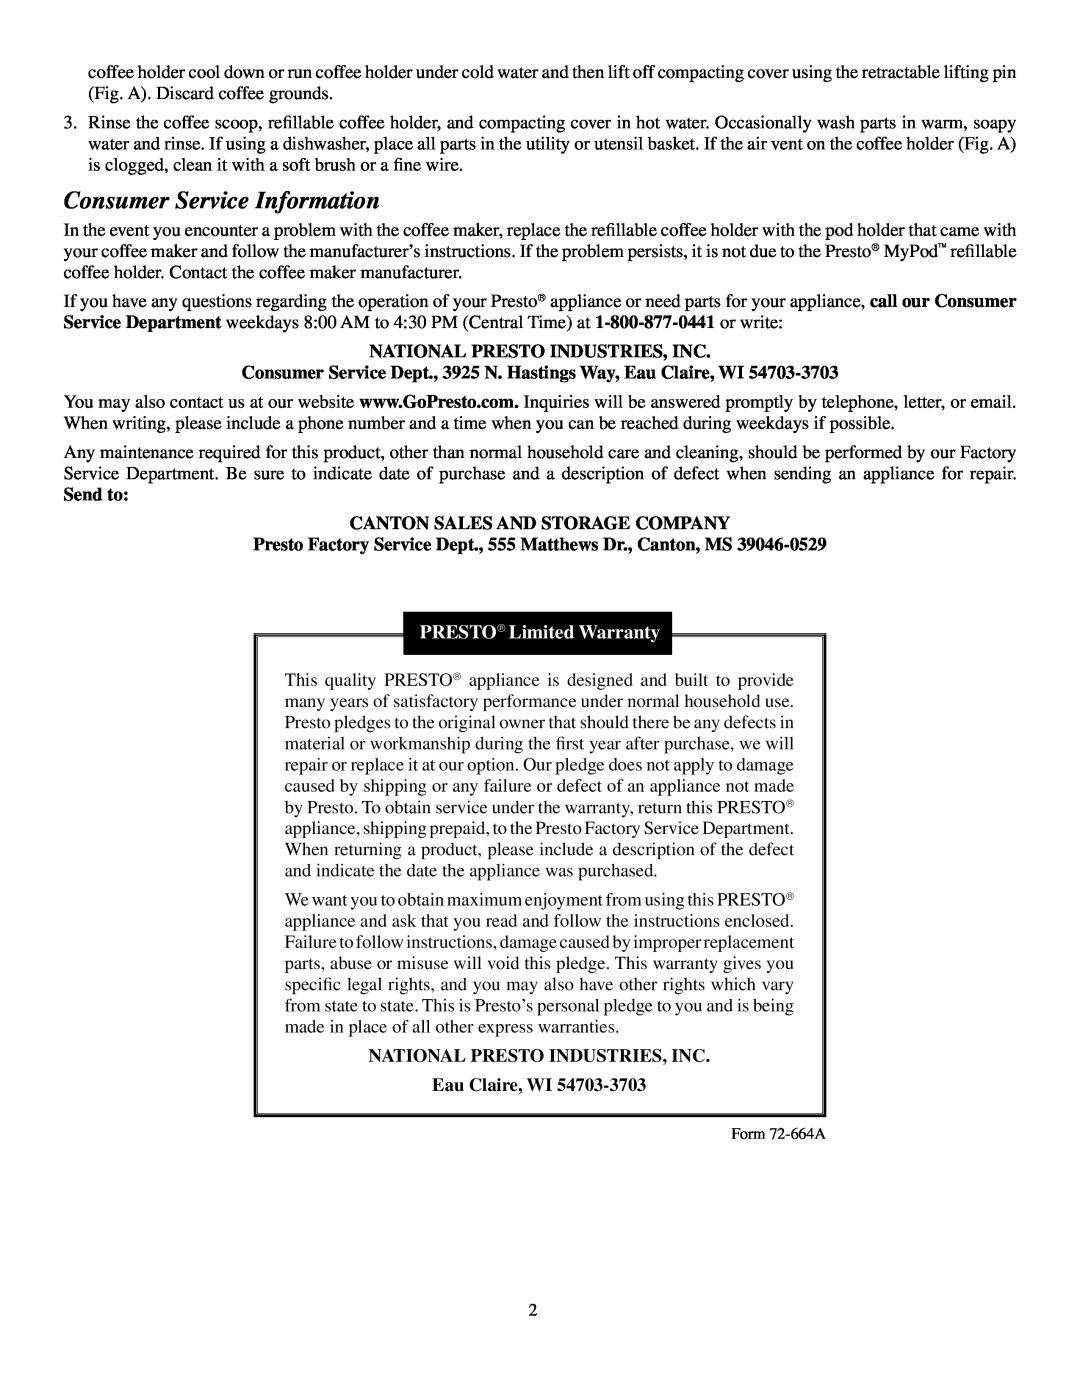 Presto 09401 manual Consumer Service Information, National Presto Industries, Inc, Send to Canton Sales and Storage Company 